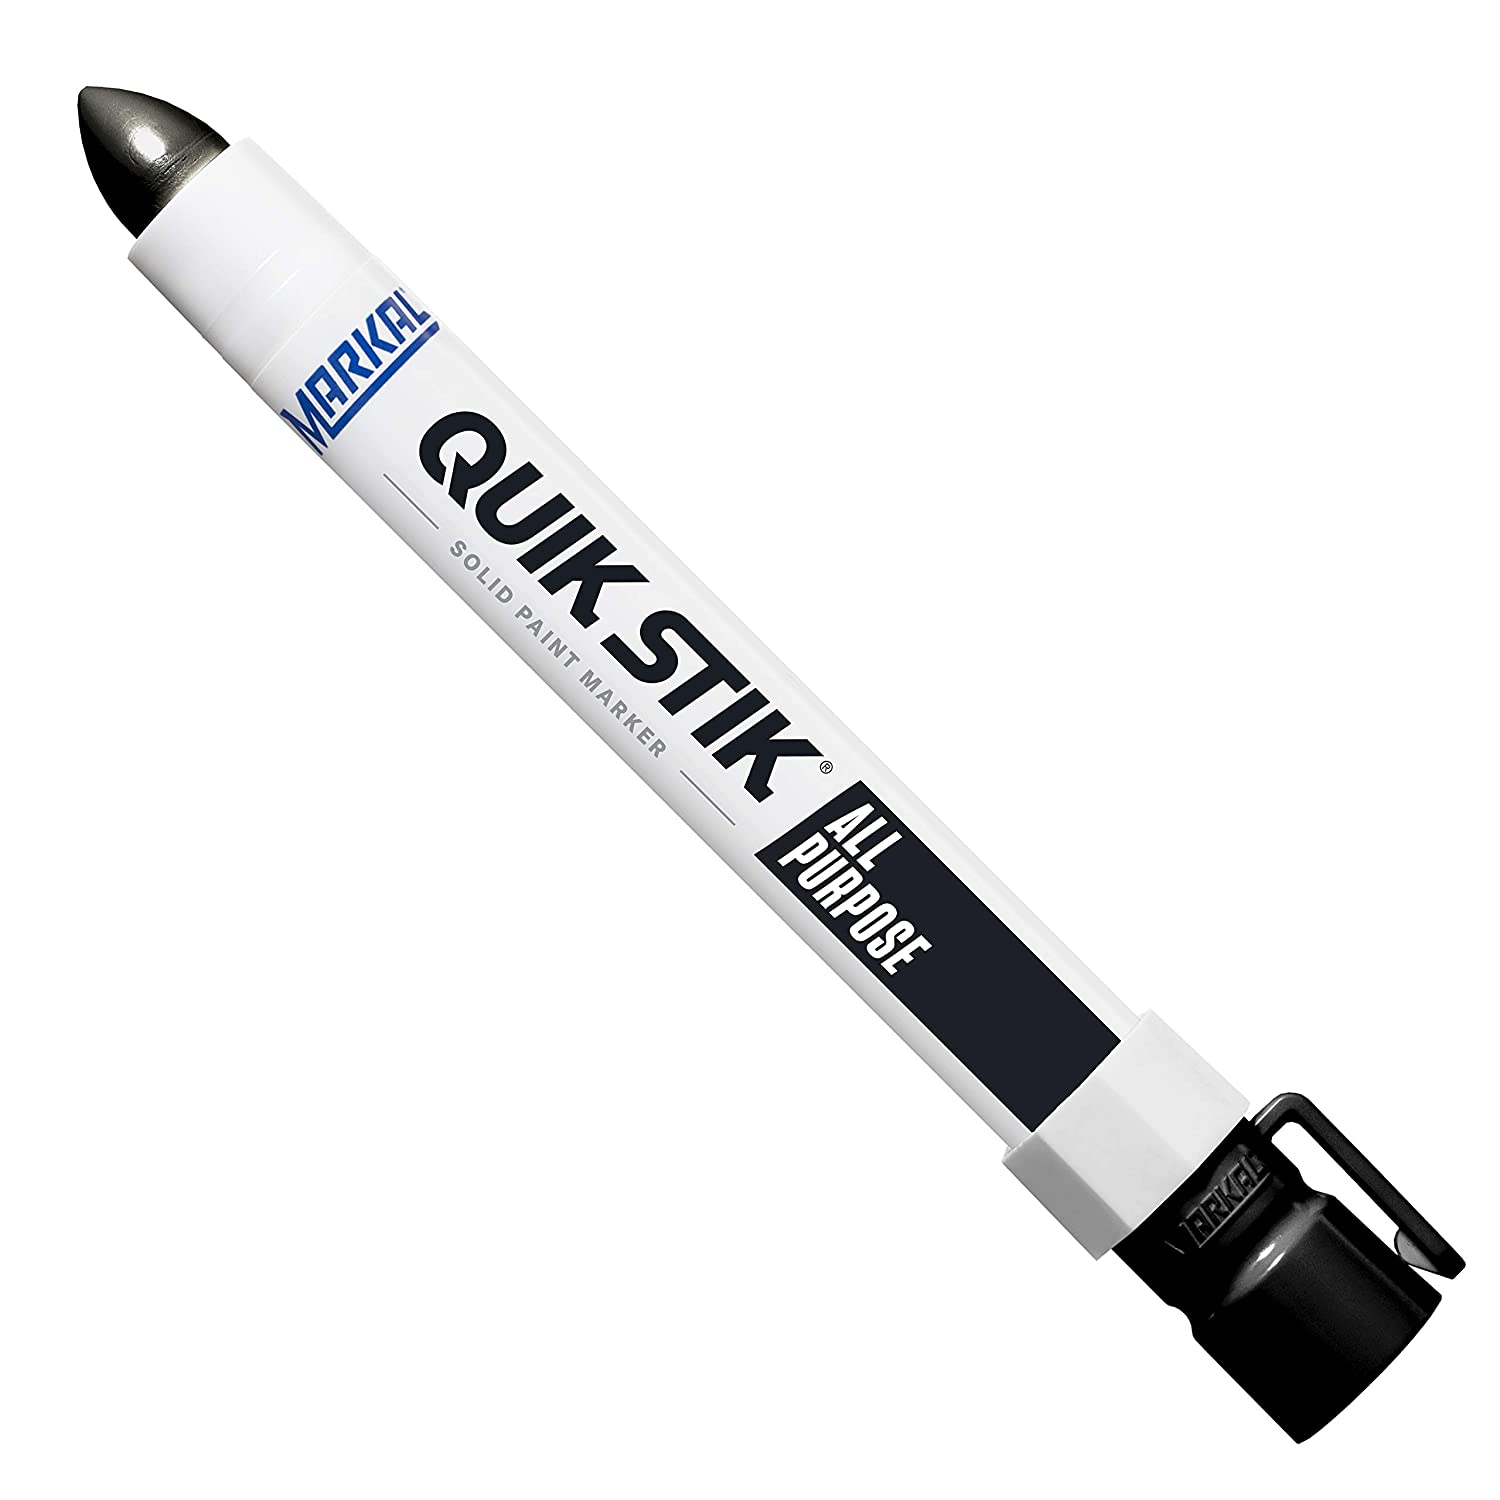 Markal Black Quik Stik All Purpose Solid Paint Marker (61050)